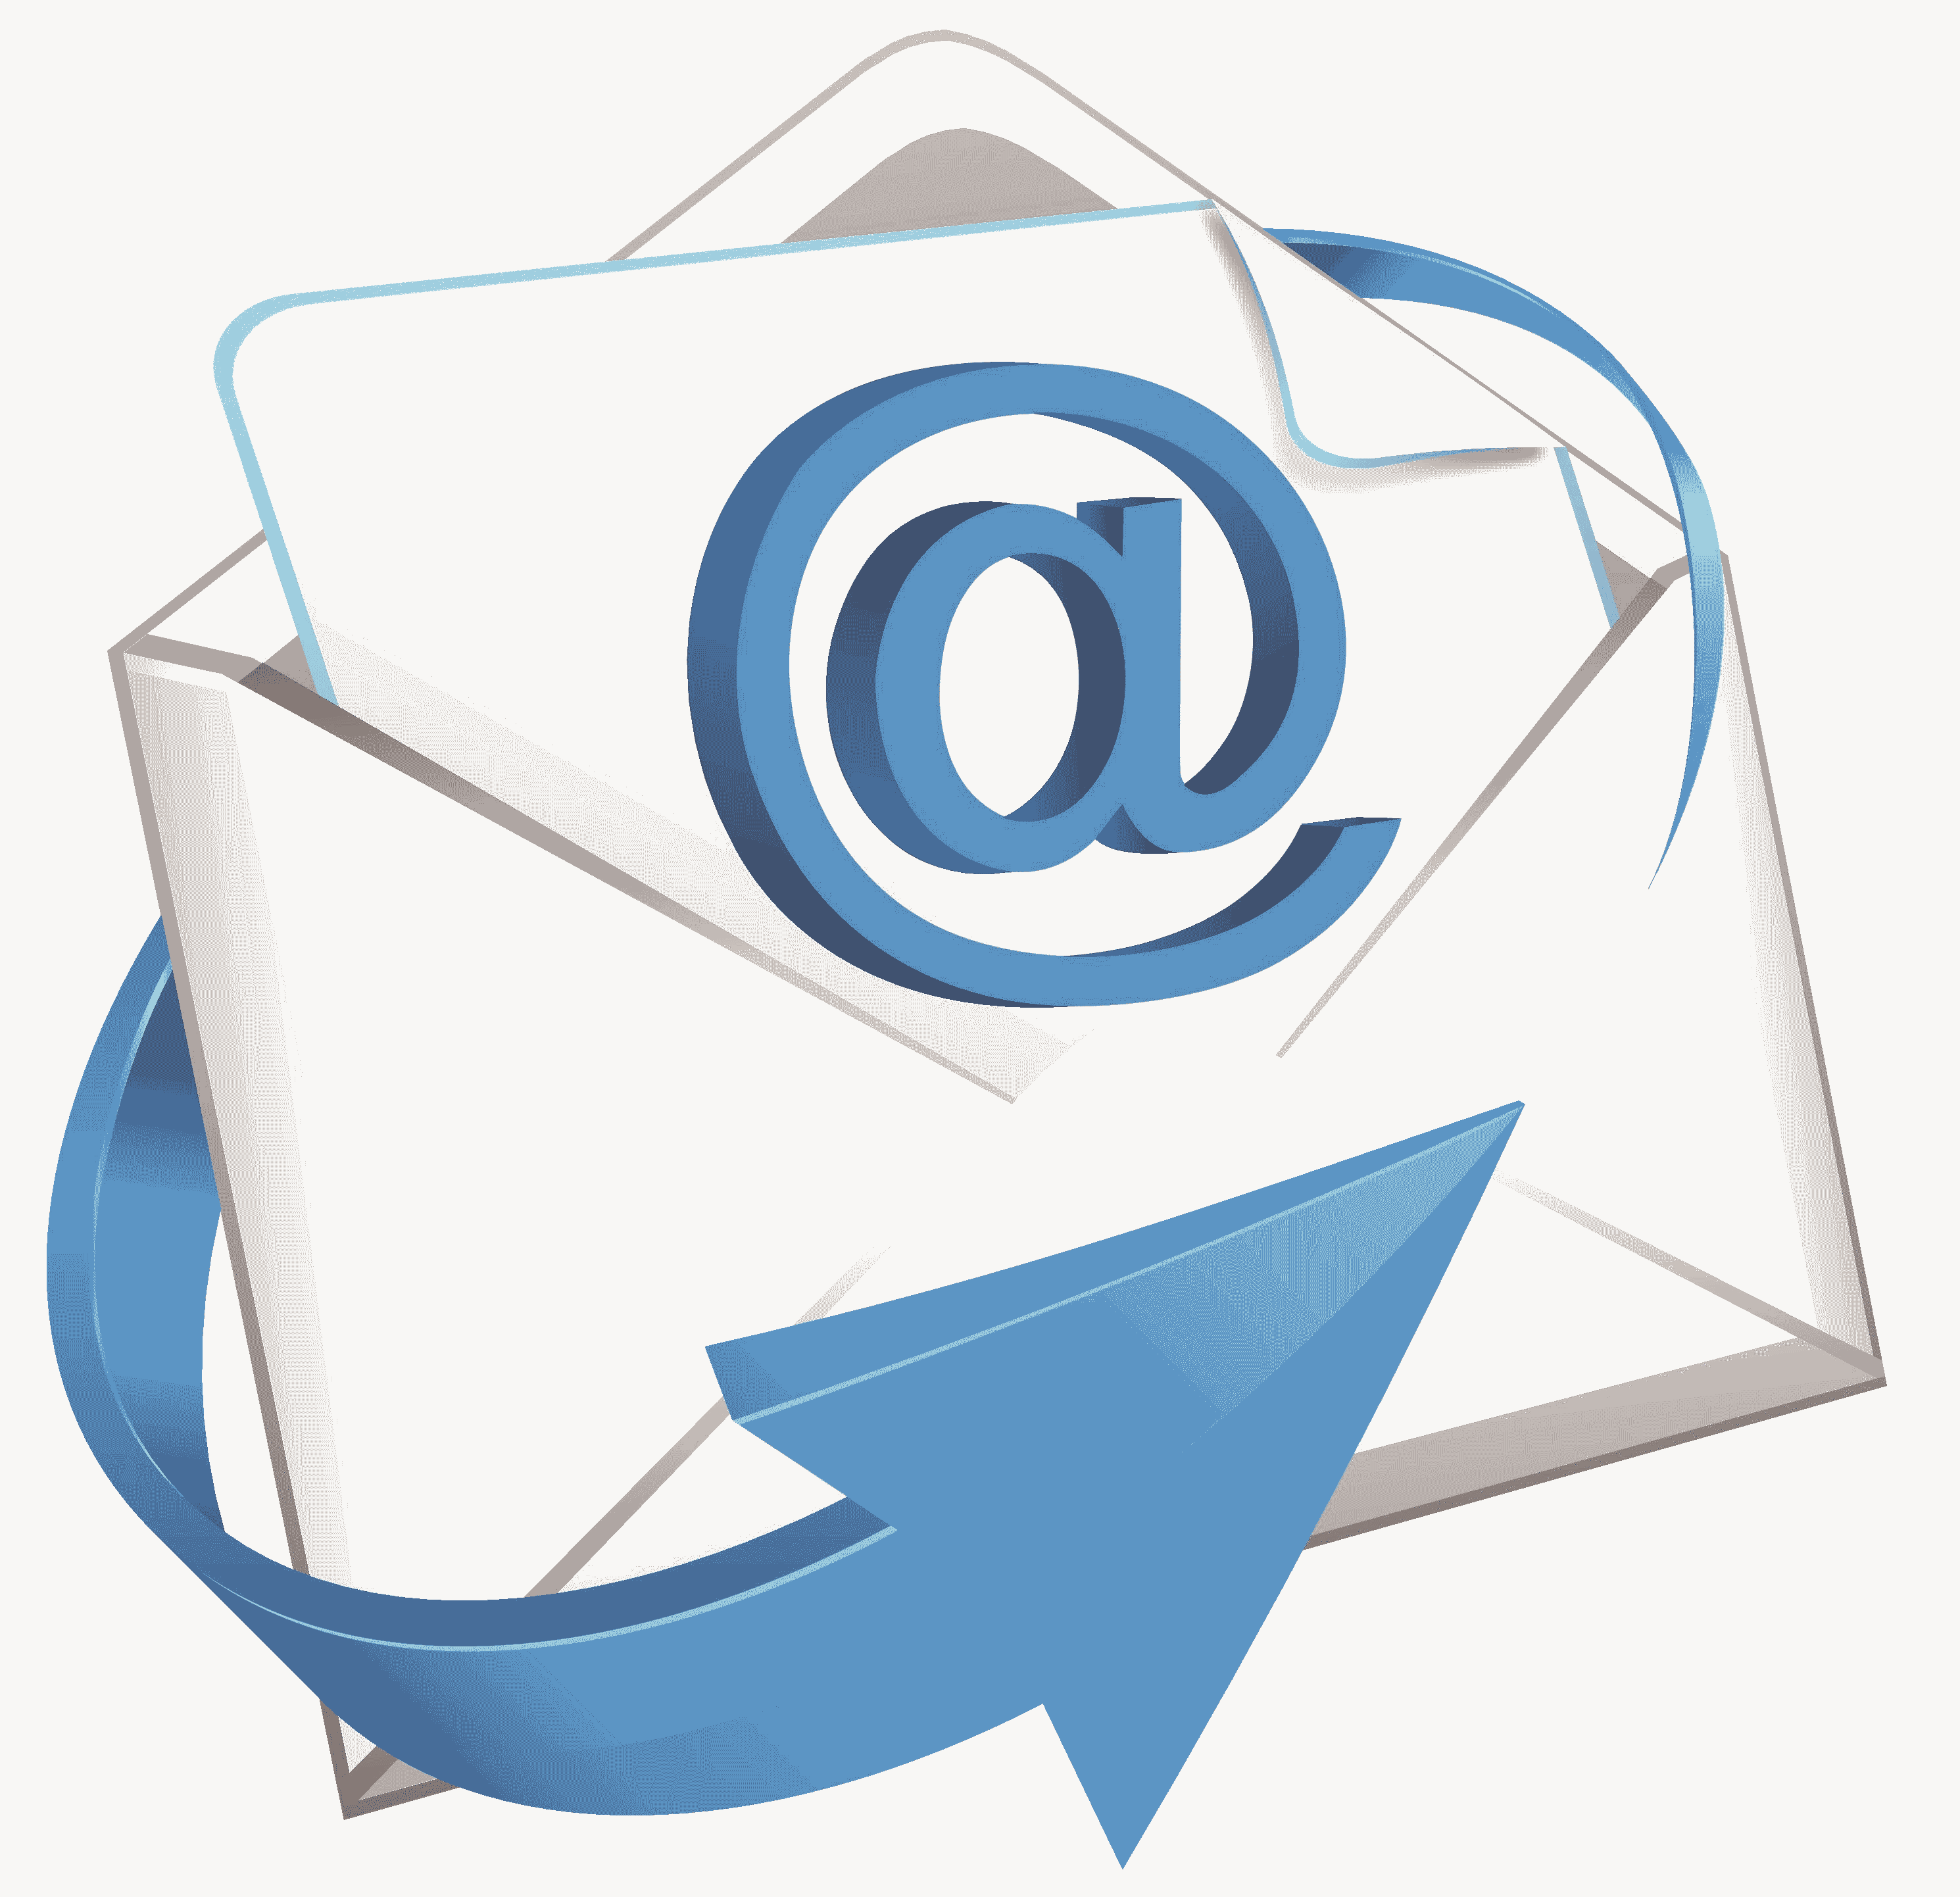 Электронная почта оригинал. Электронная почта. Значок почты. Логотип электронной почты. Электронная почта (e-mail).